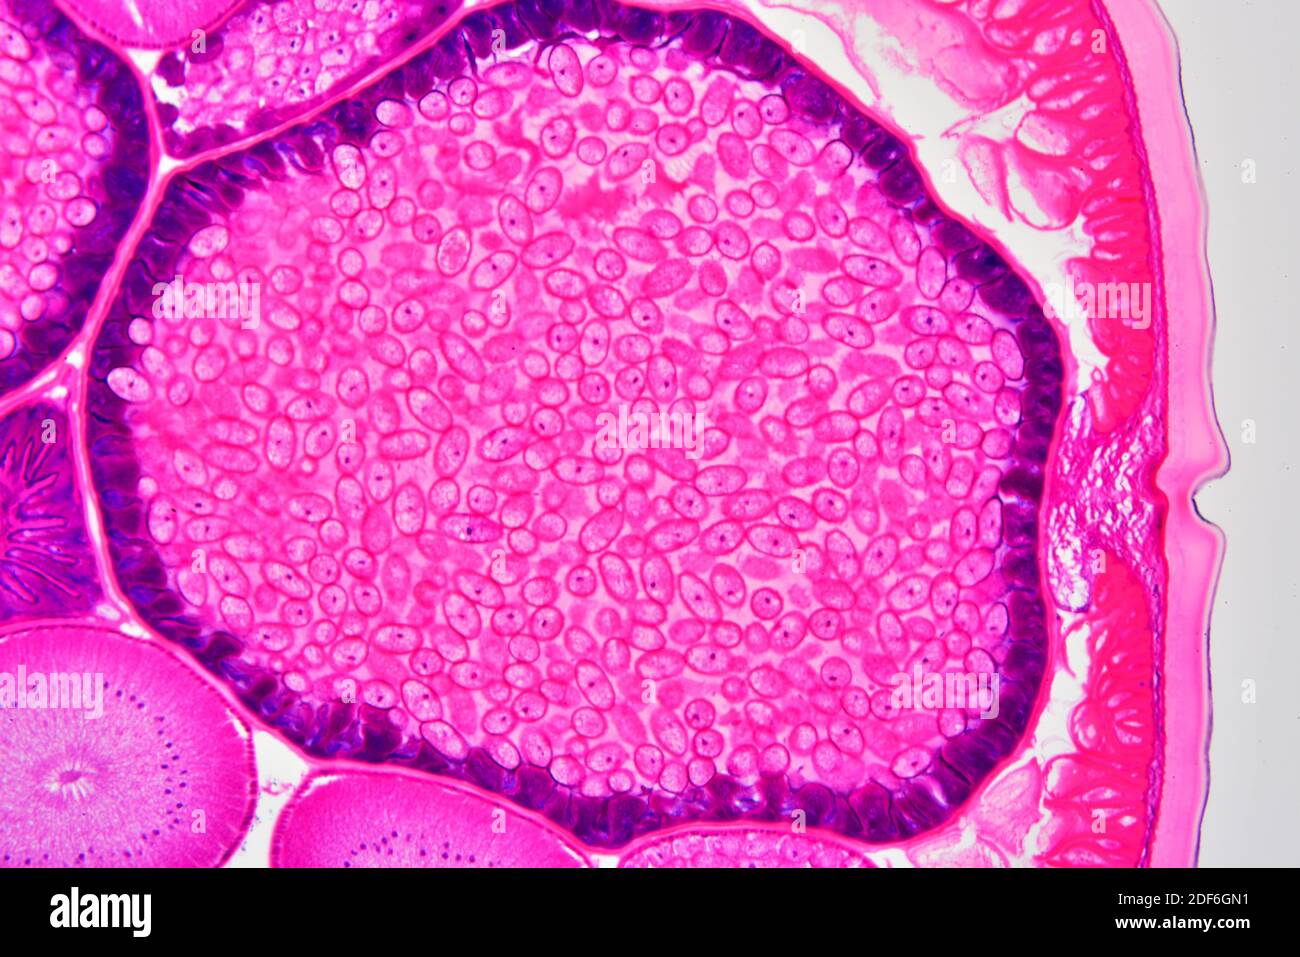 Ascaris lumbricoides female showing cuticle, epithelium, longitudinal muscles and uterus with eggs. Optical microscope X100. Stock Photo